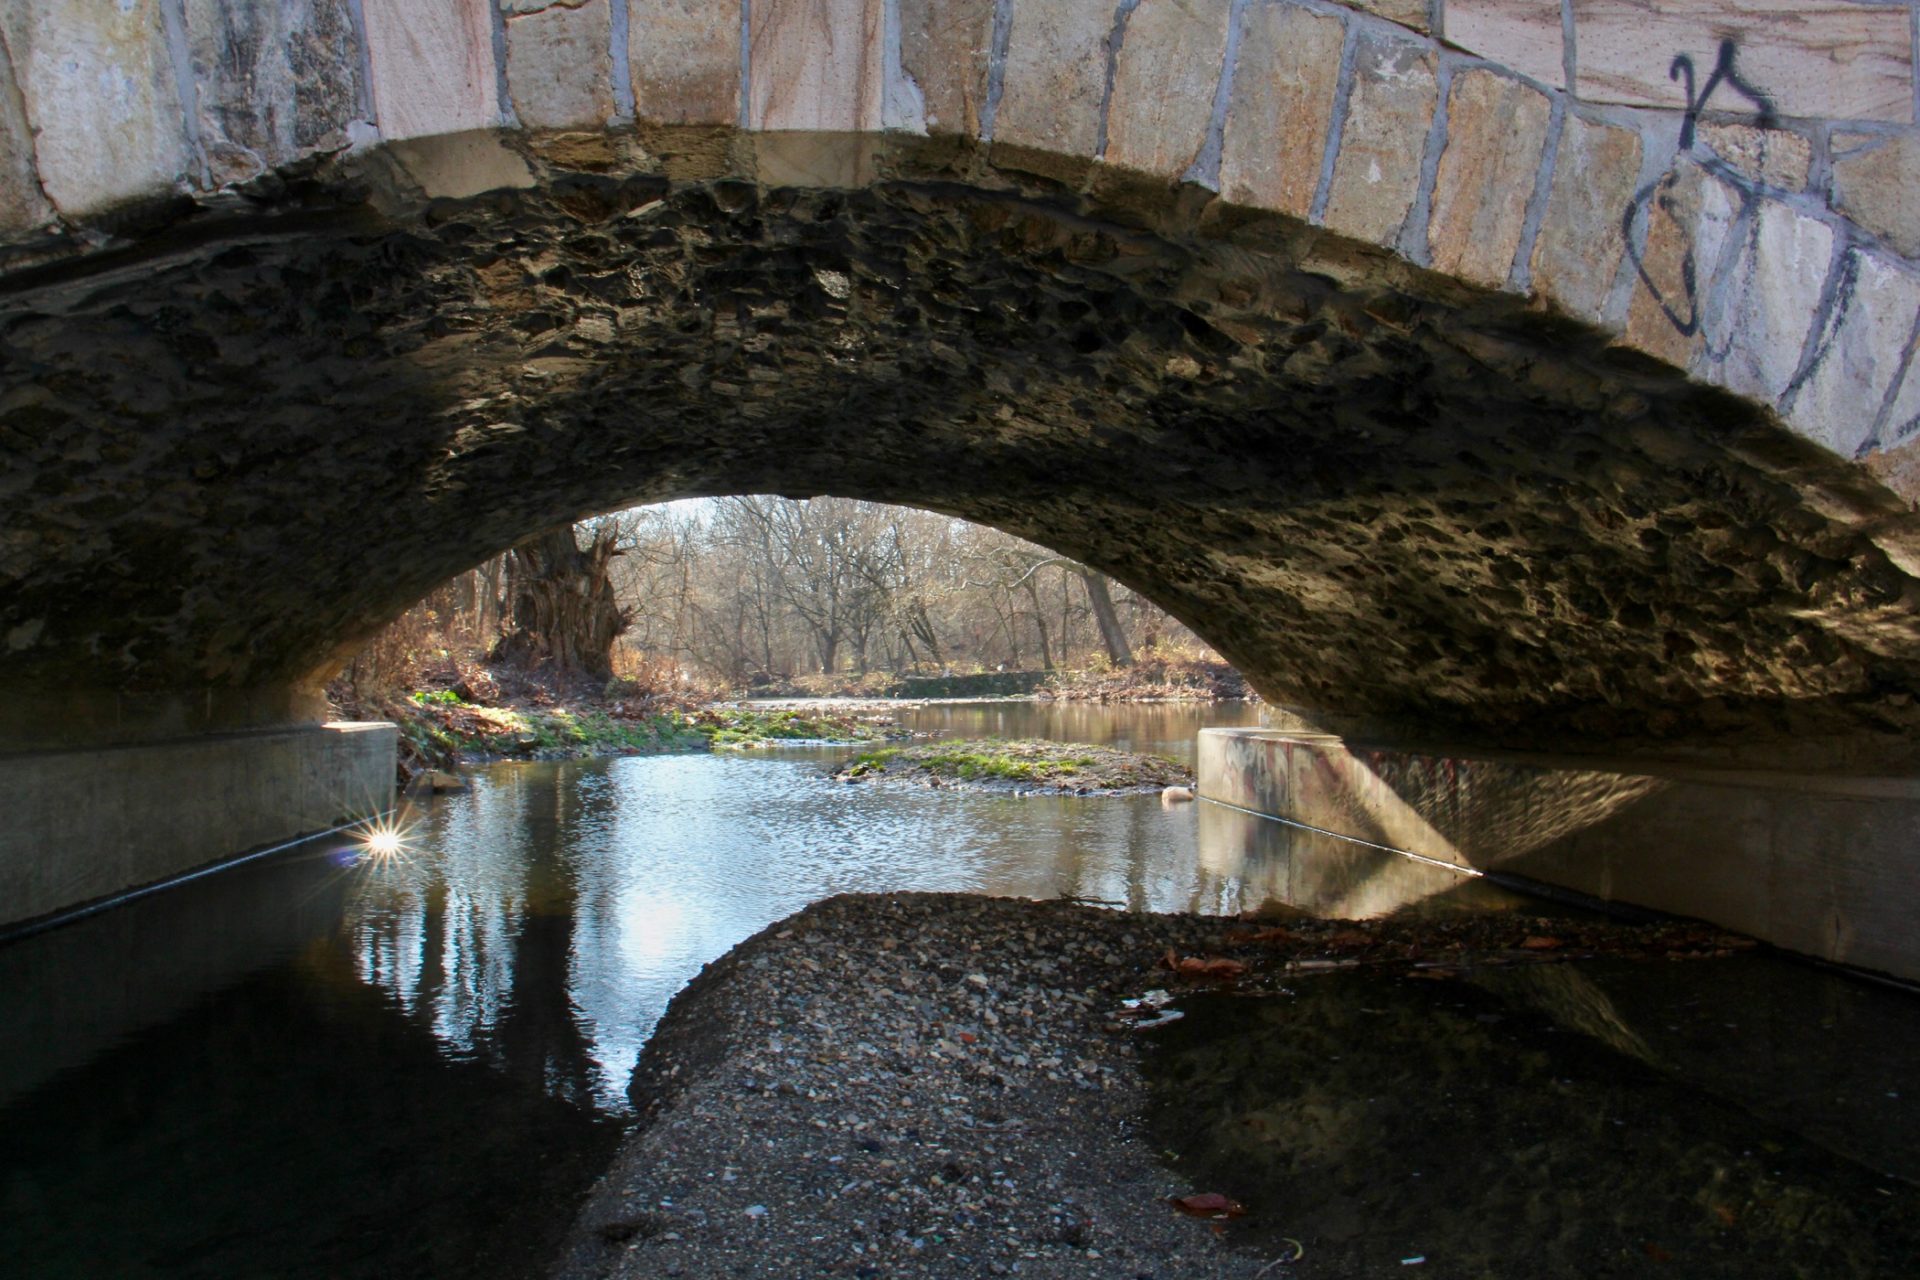 The Tacony Creek passes under the Adams Avenue Bridge.